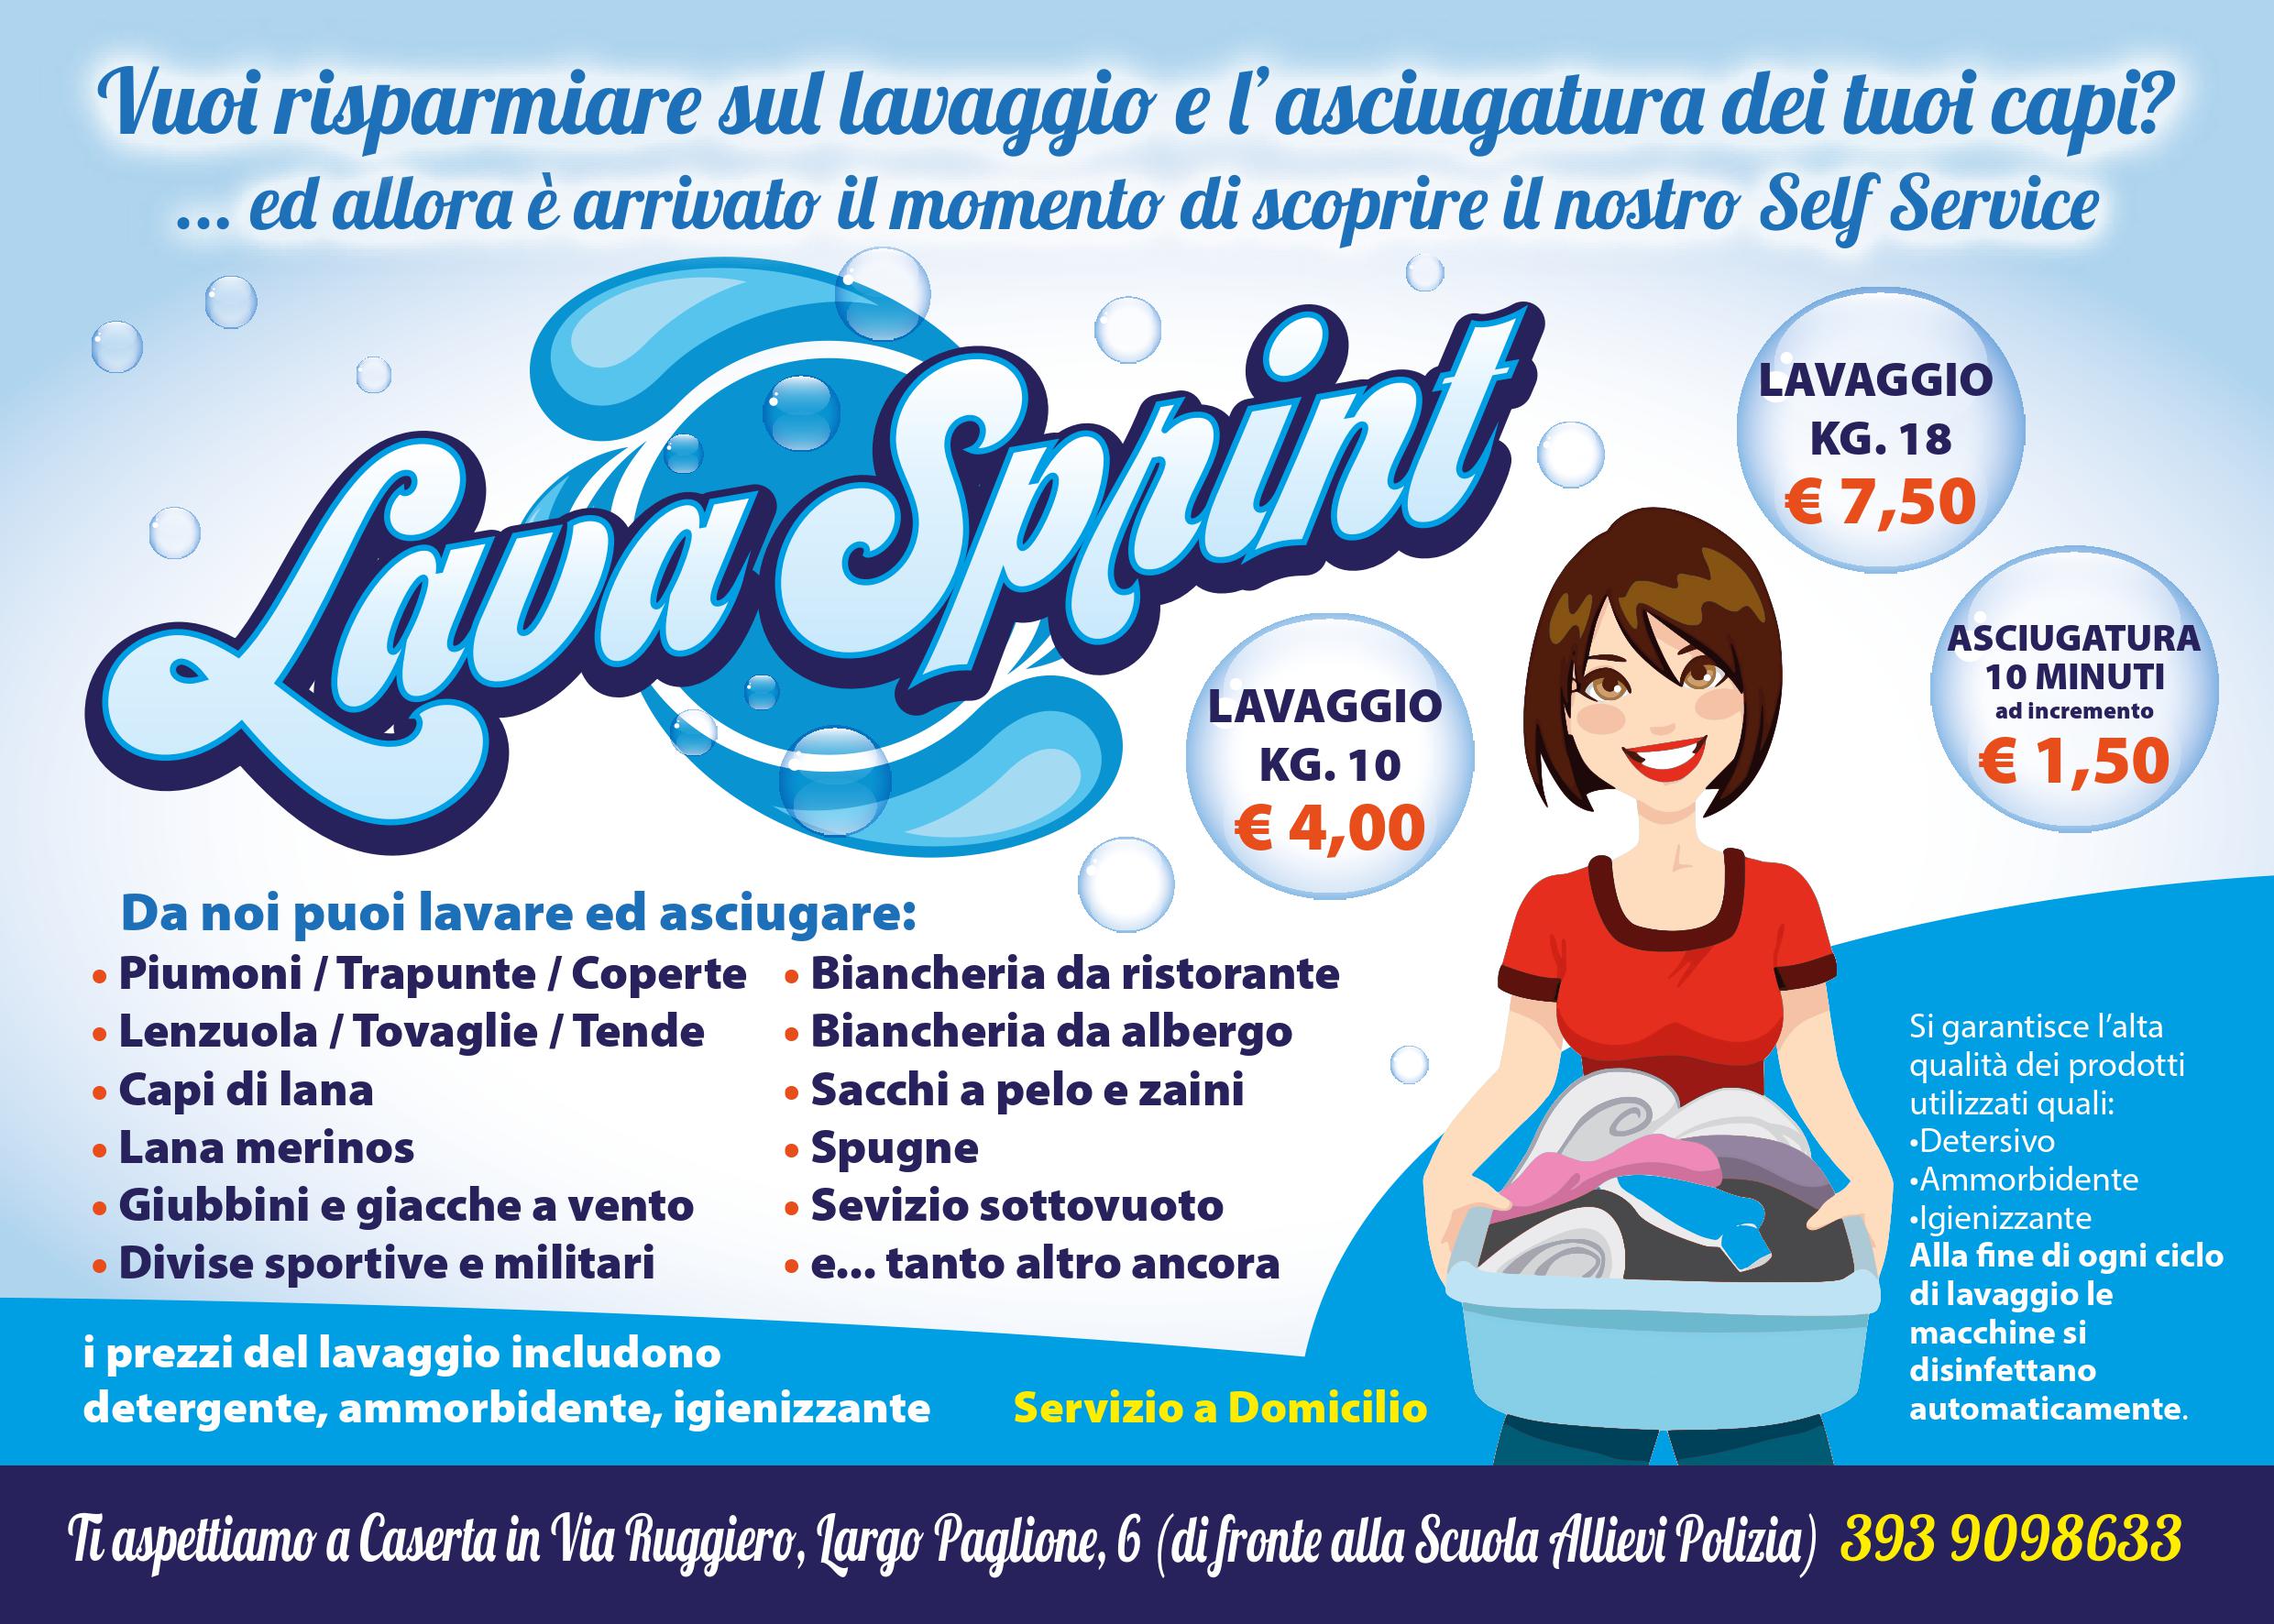 Lava Sprint lavanderia self service Caserta